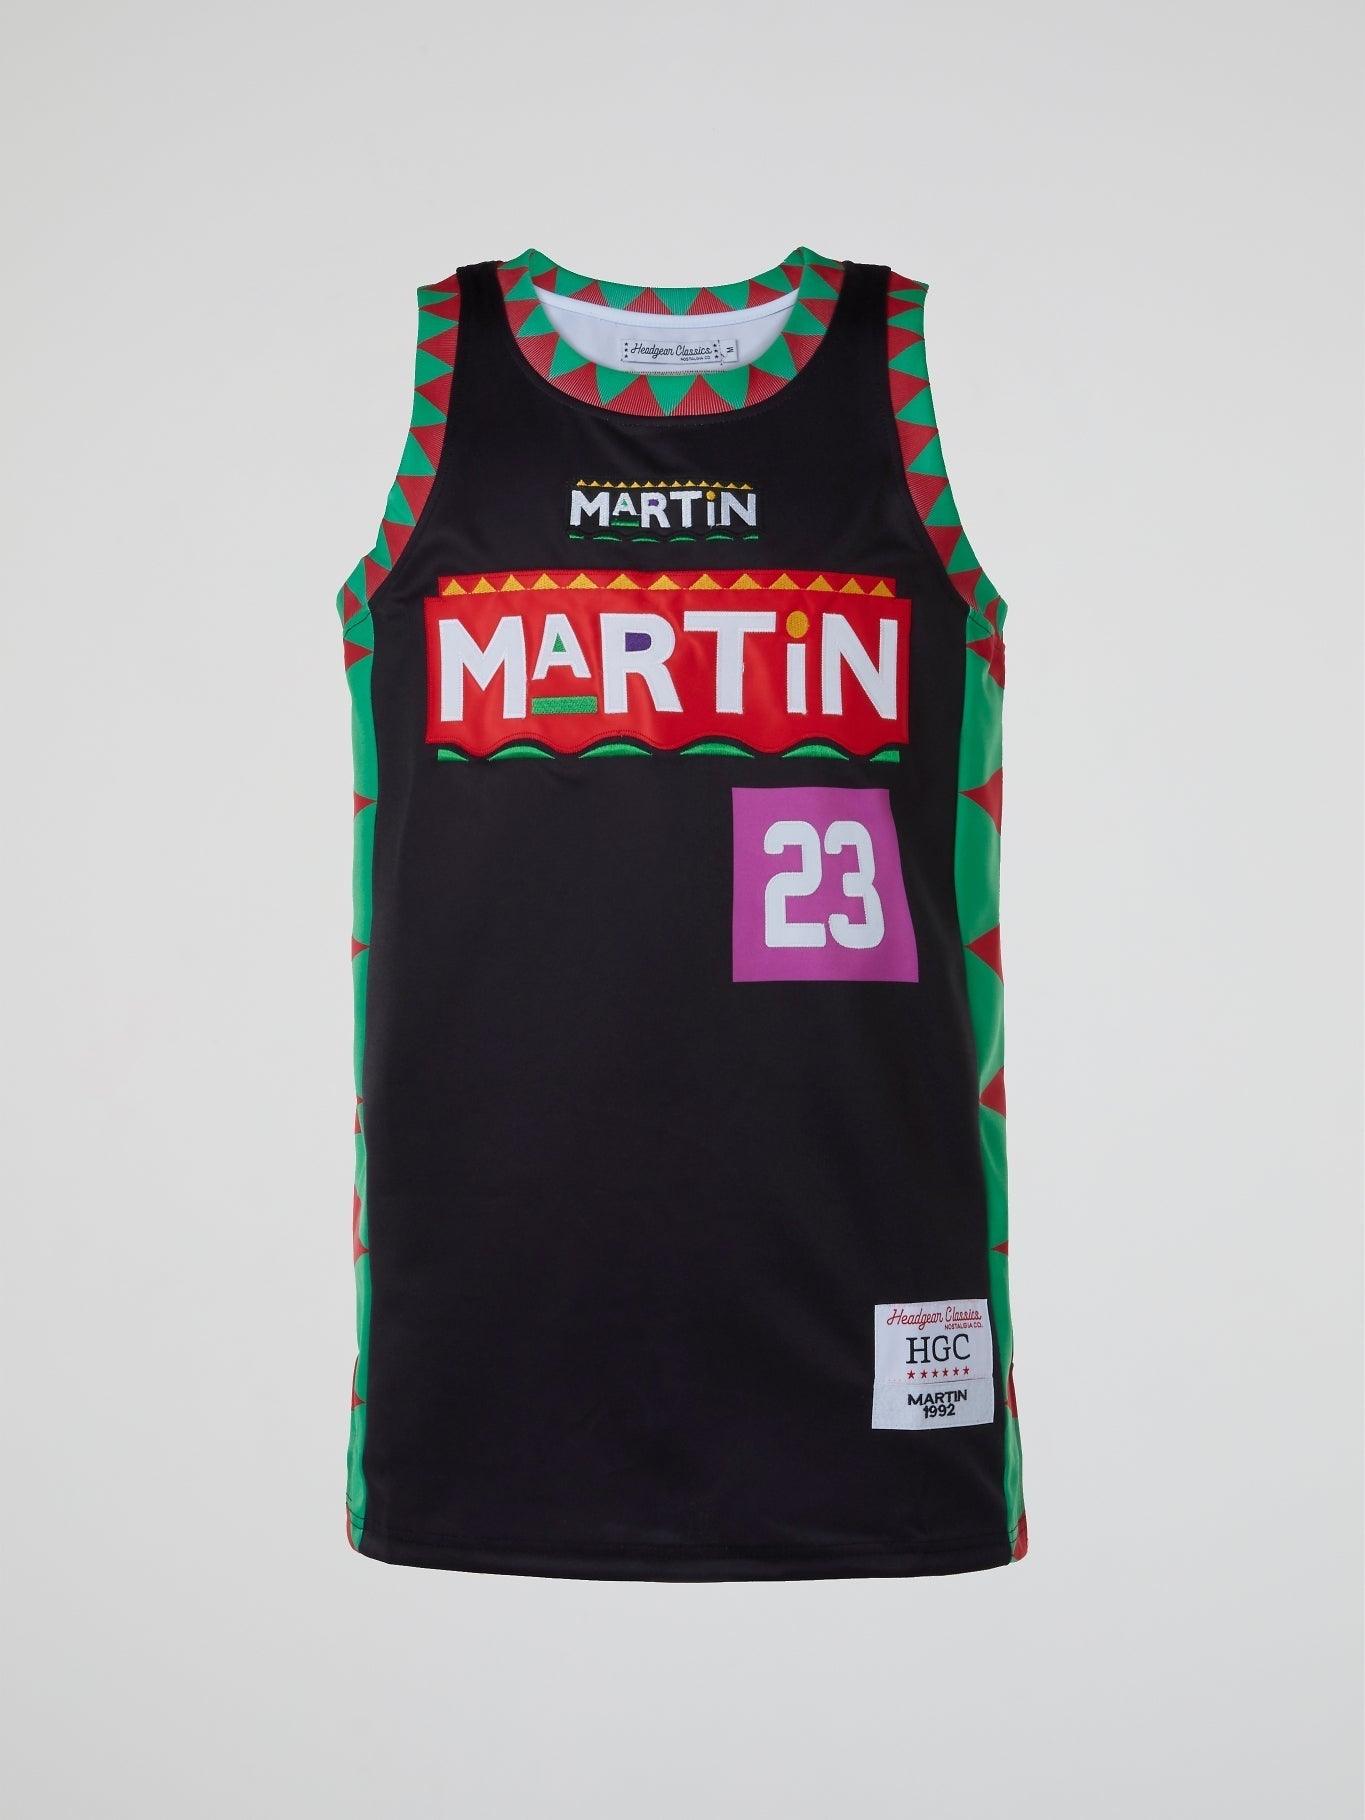 Martin Marty Mar Basketball Jersey - B-Hype Society